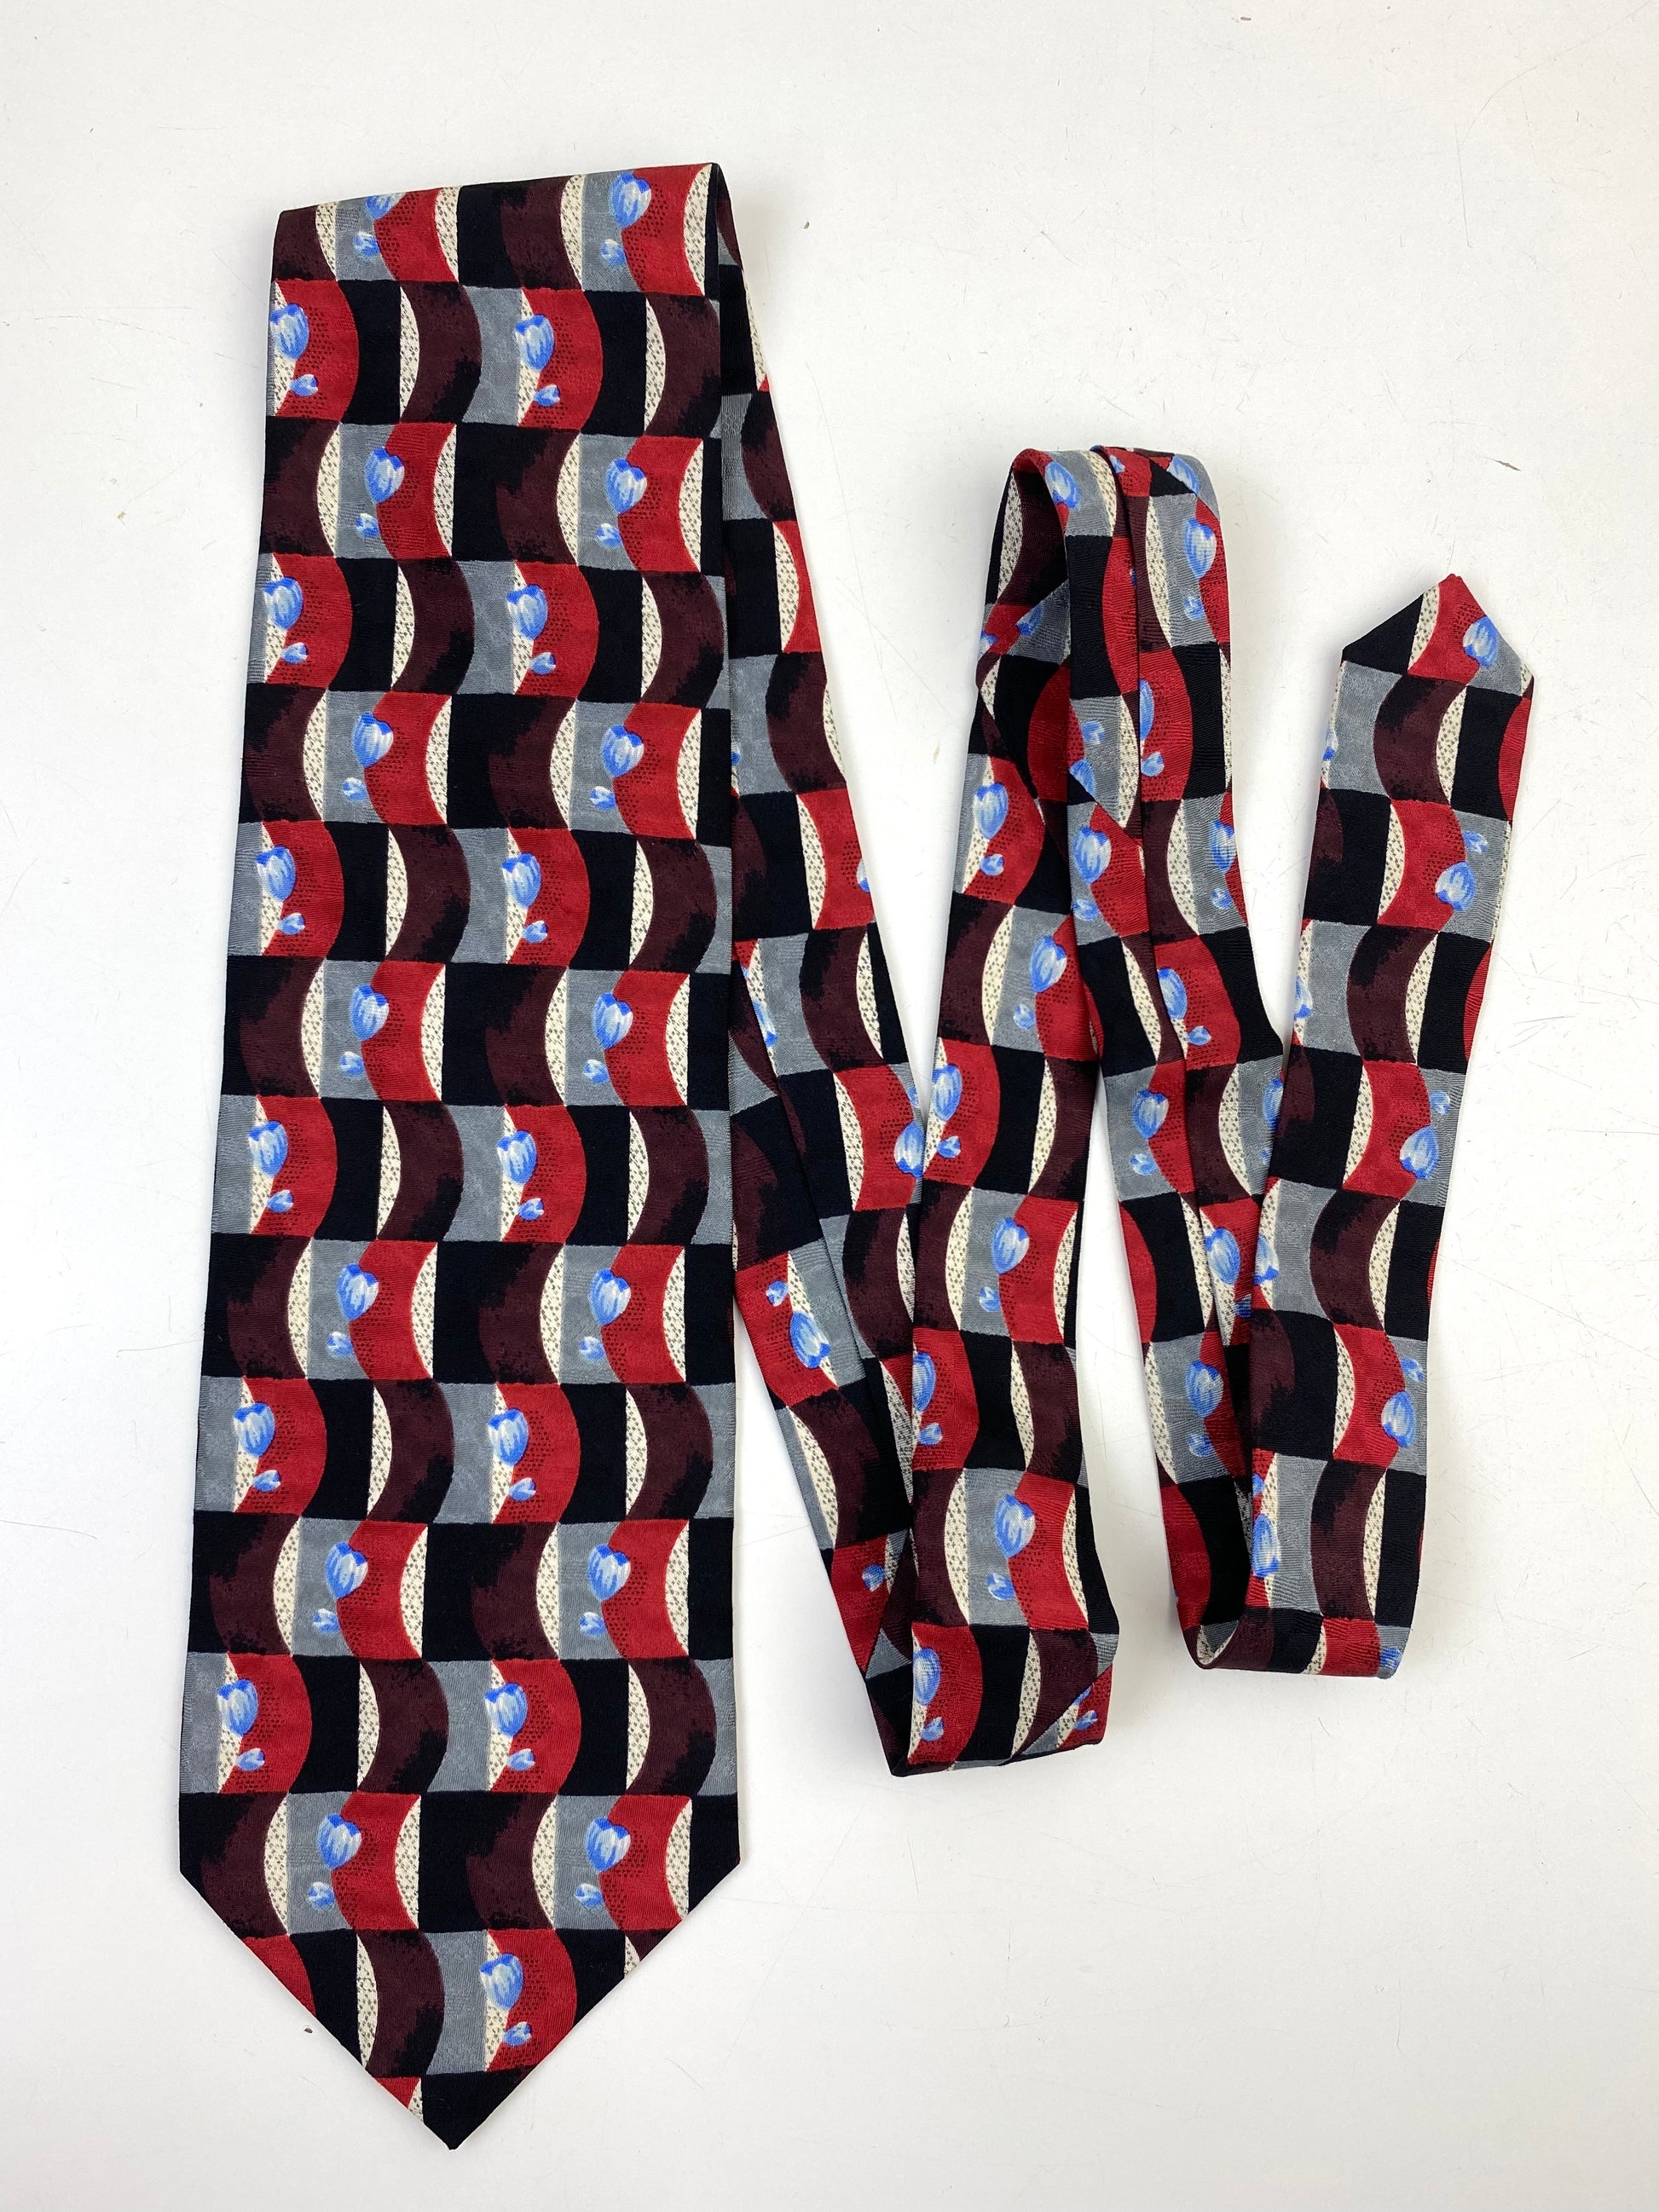 90s Deadstock Silk Necktie, Men's Vintage Red/ Black Geometric Wave & Floral Pattern Tie, NOS